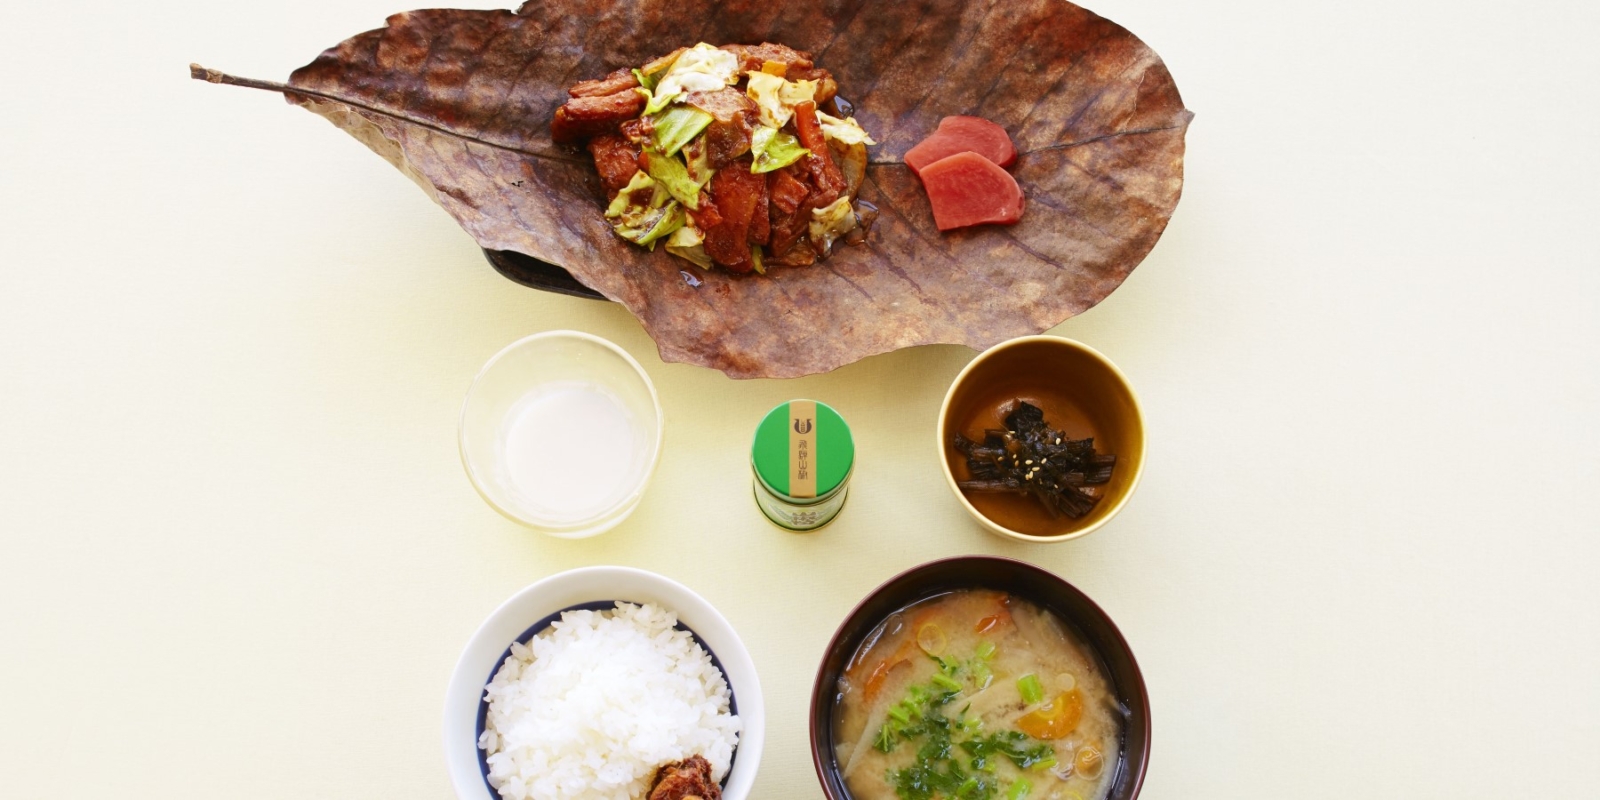 『d design travel ニッポンフードシフト特別編集号』発刊　 日本の未来を作る　食の生産者を紹介